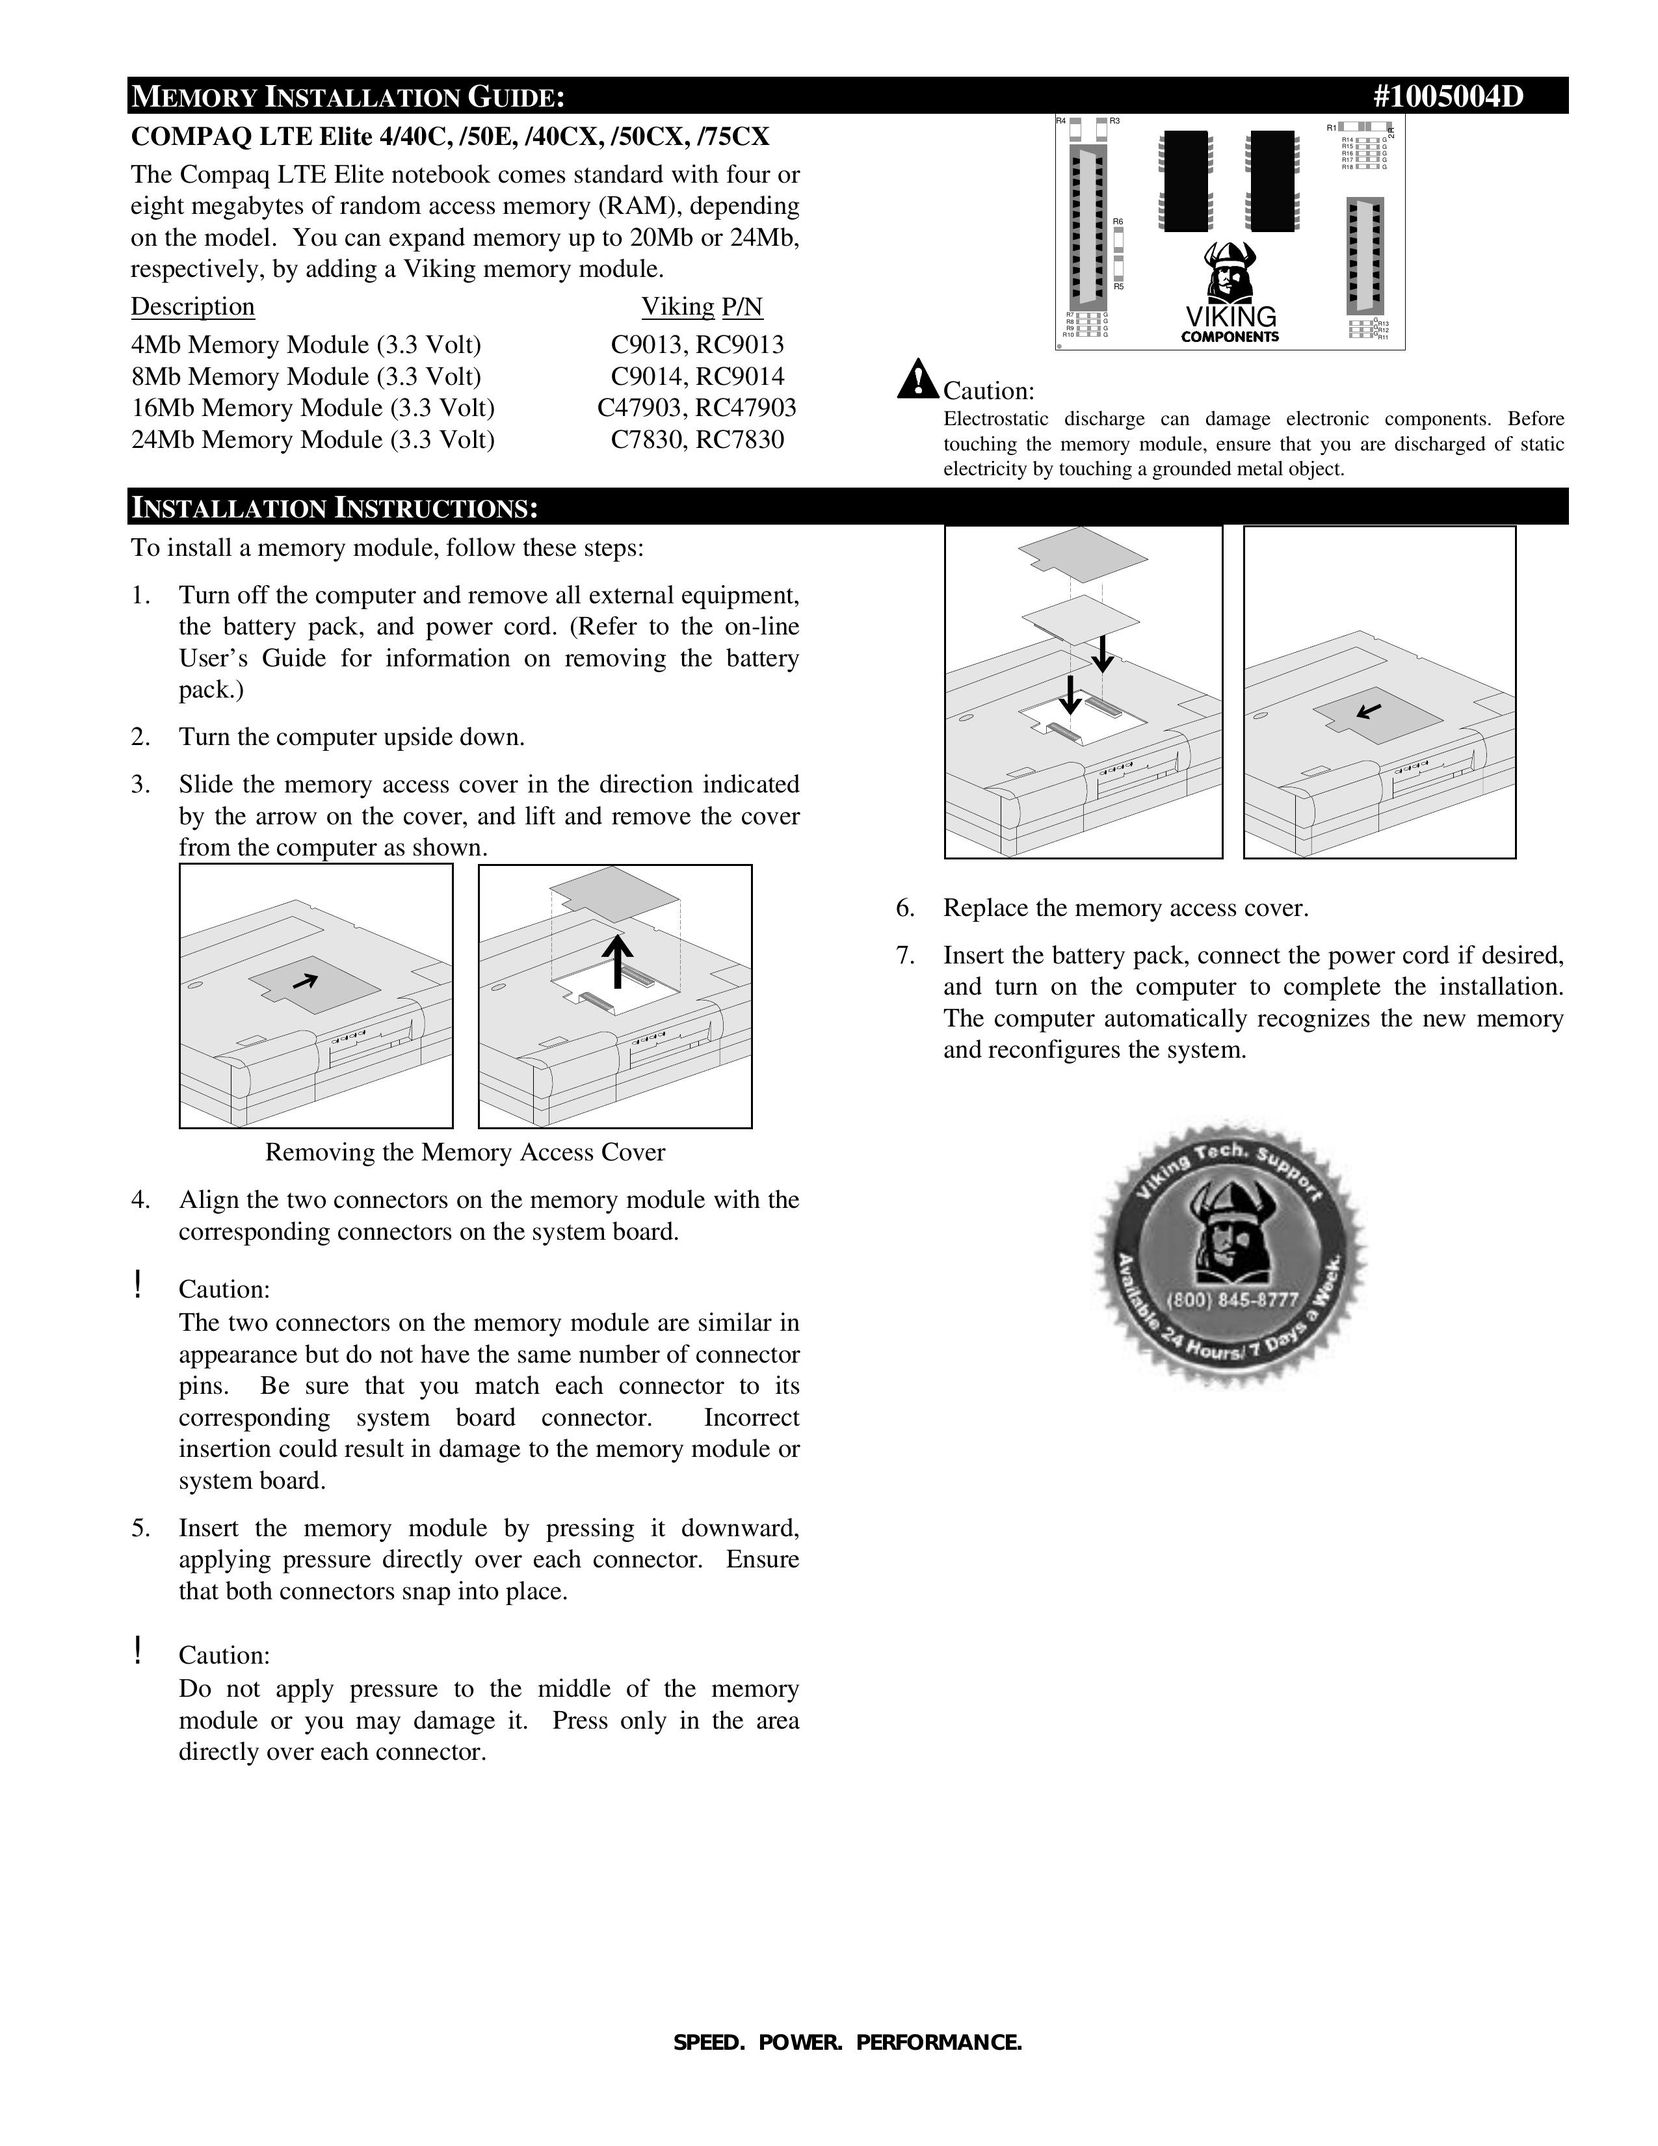 Compaq /40CX Laptop User Manual